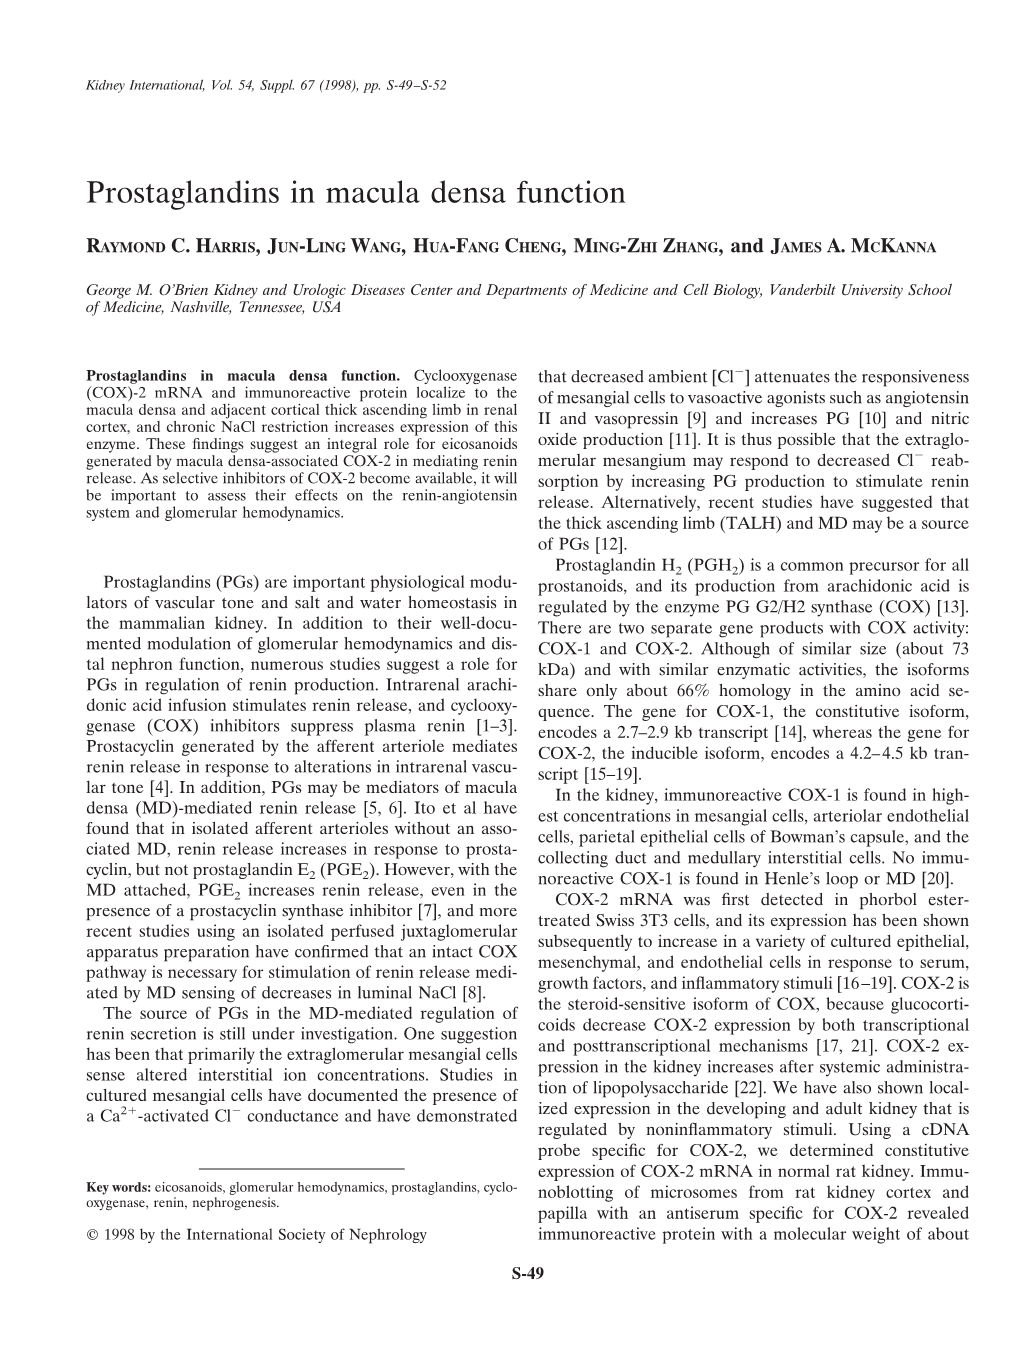 Prostaglandins in Macula Densa Function